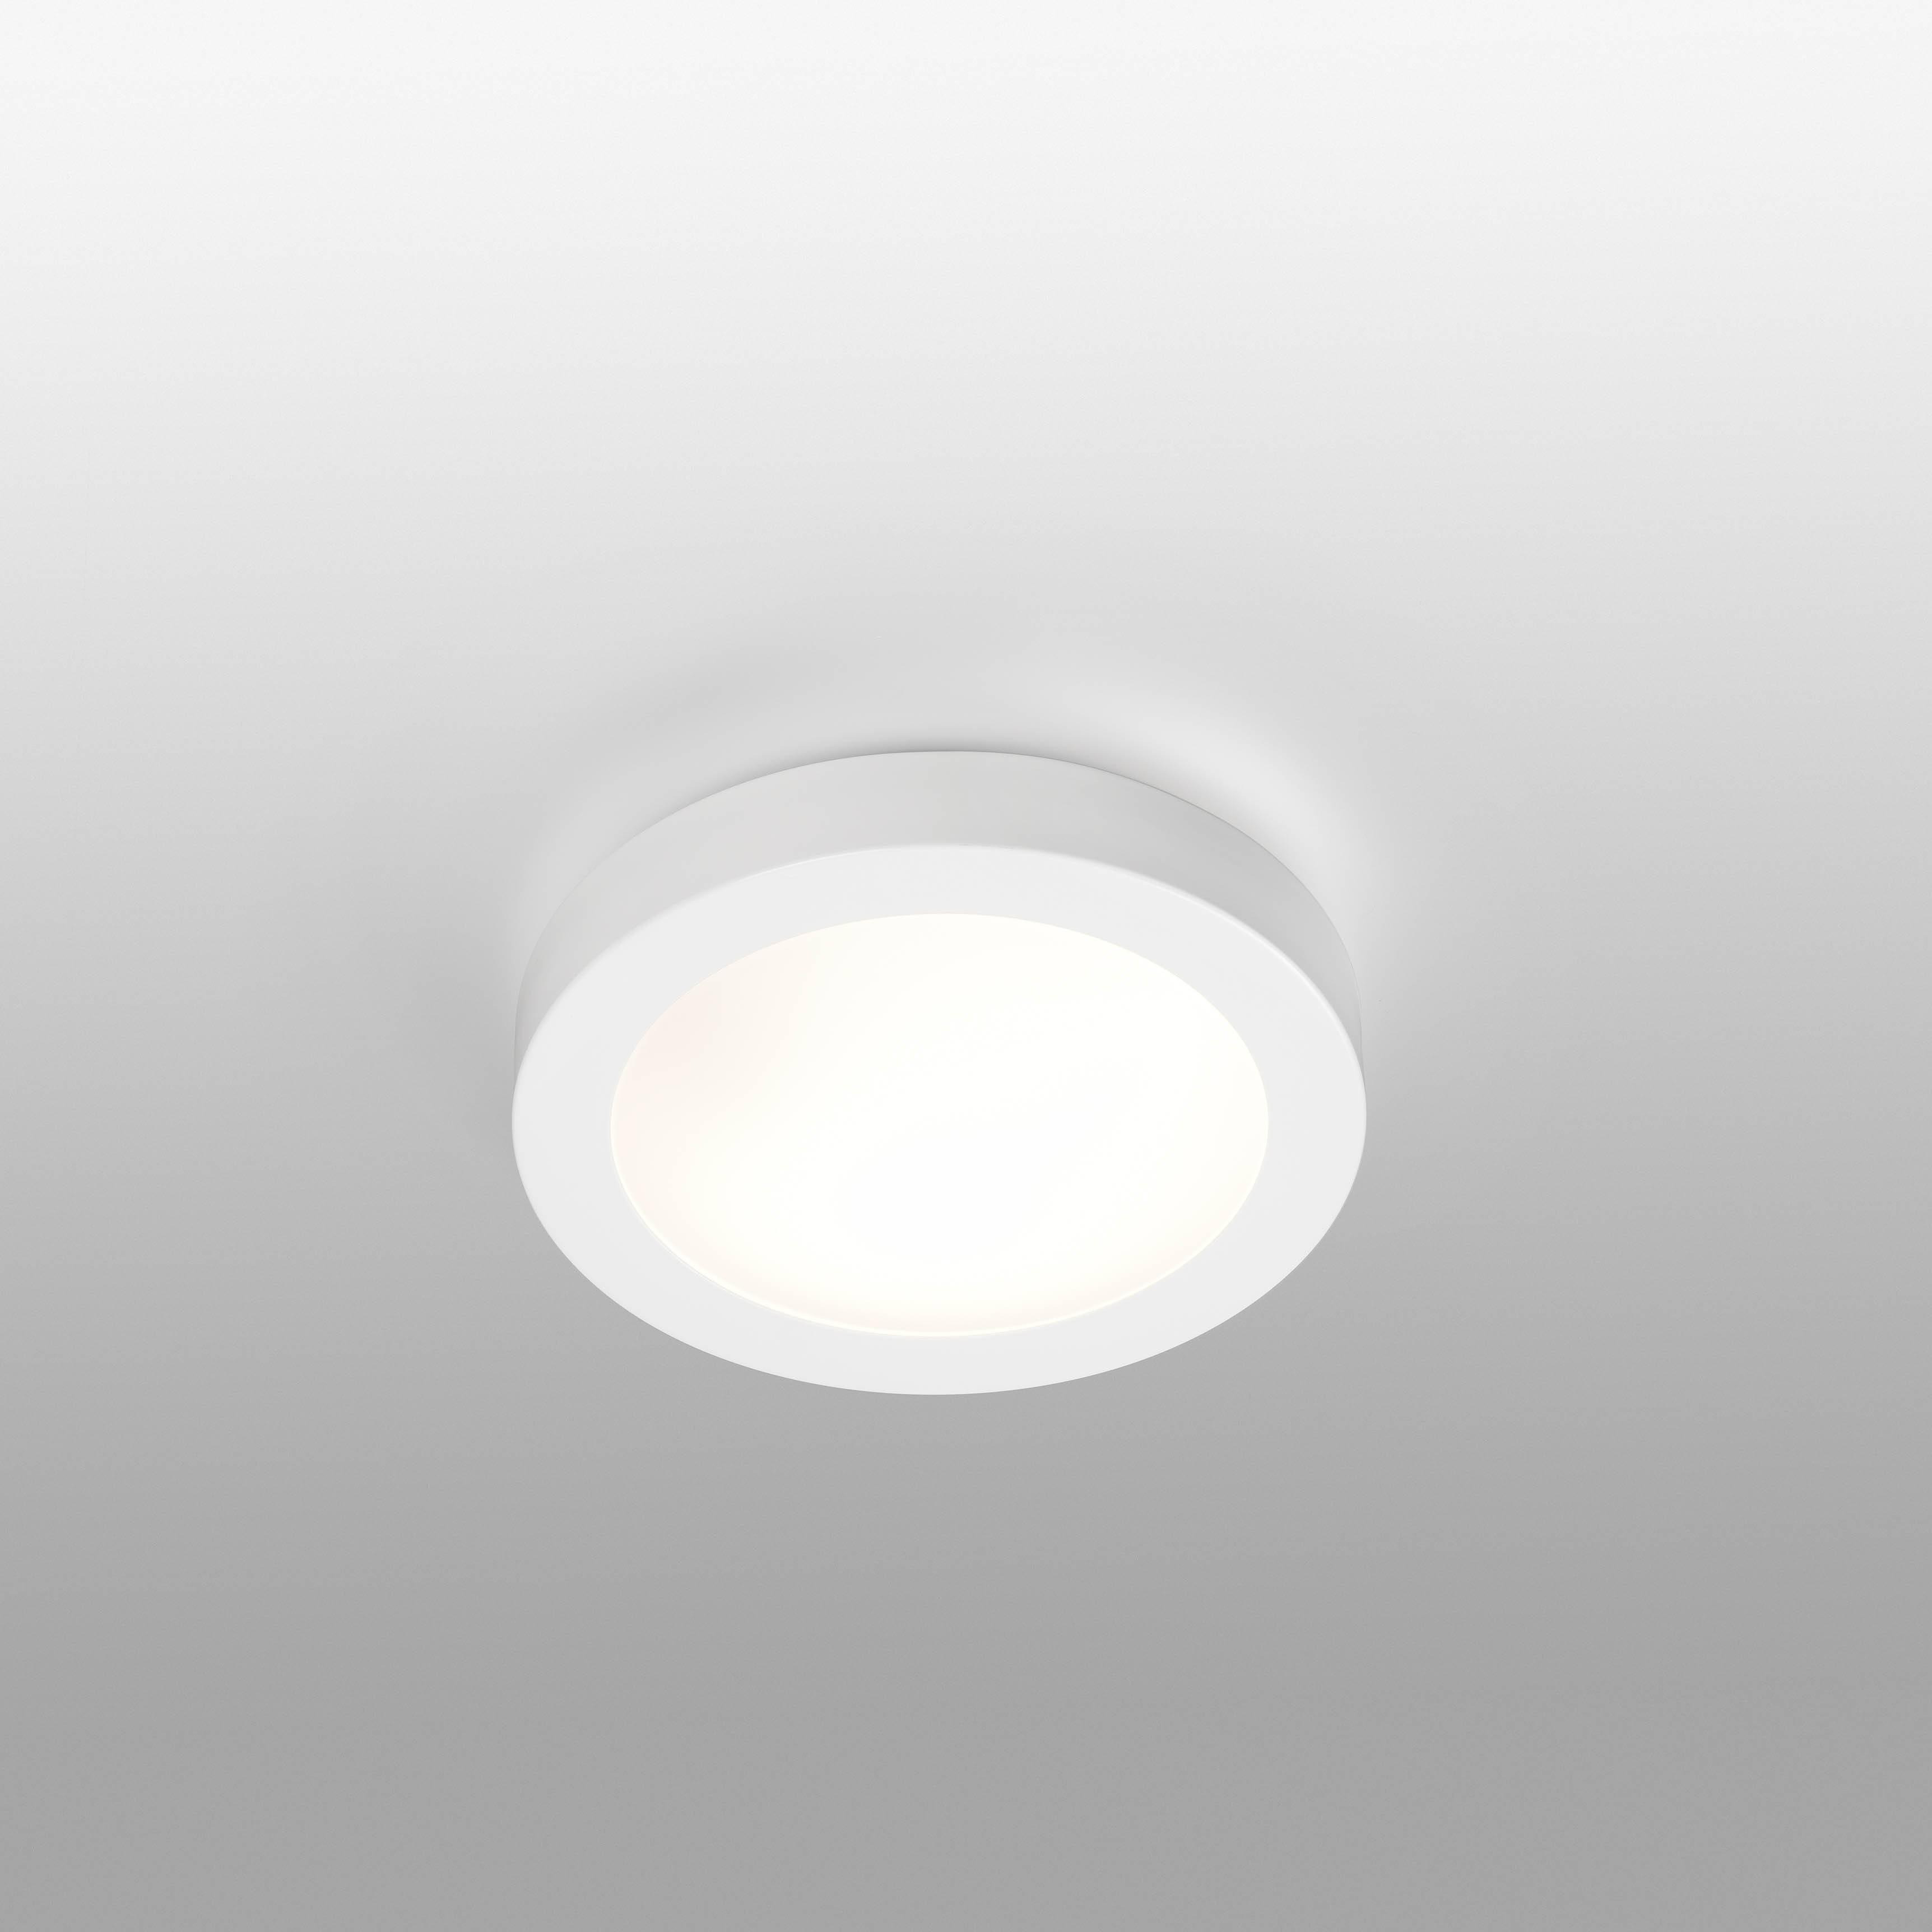 Logos 1 Light Small Round Bathroom Flush Ceiling Light White IP44 E27 - image 1